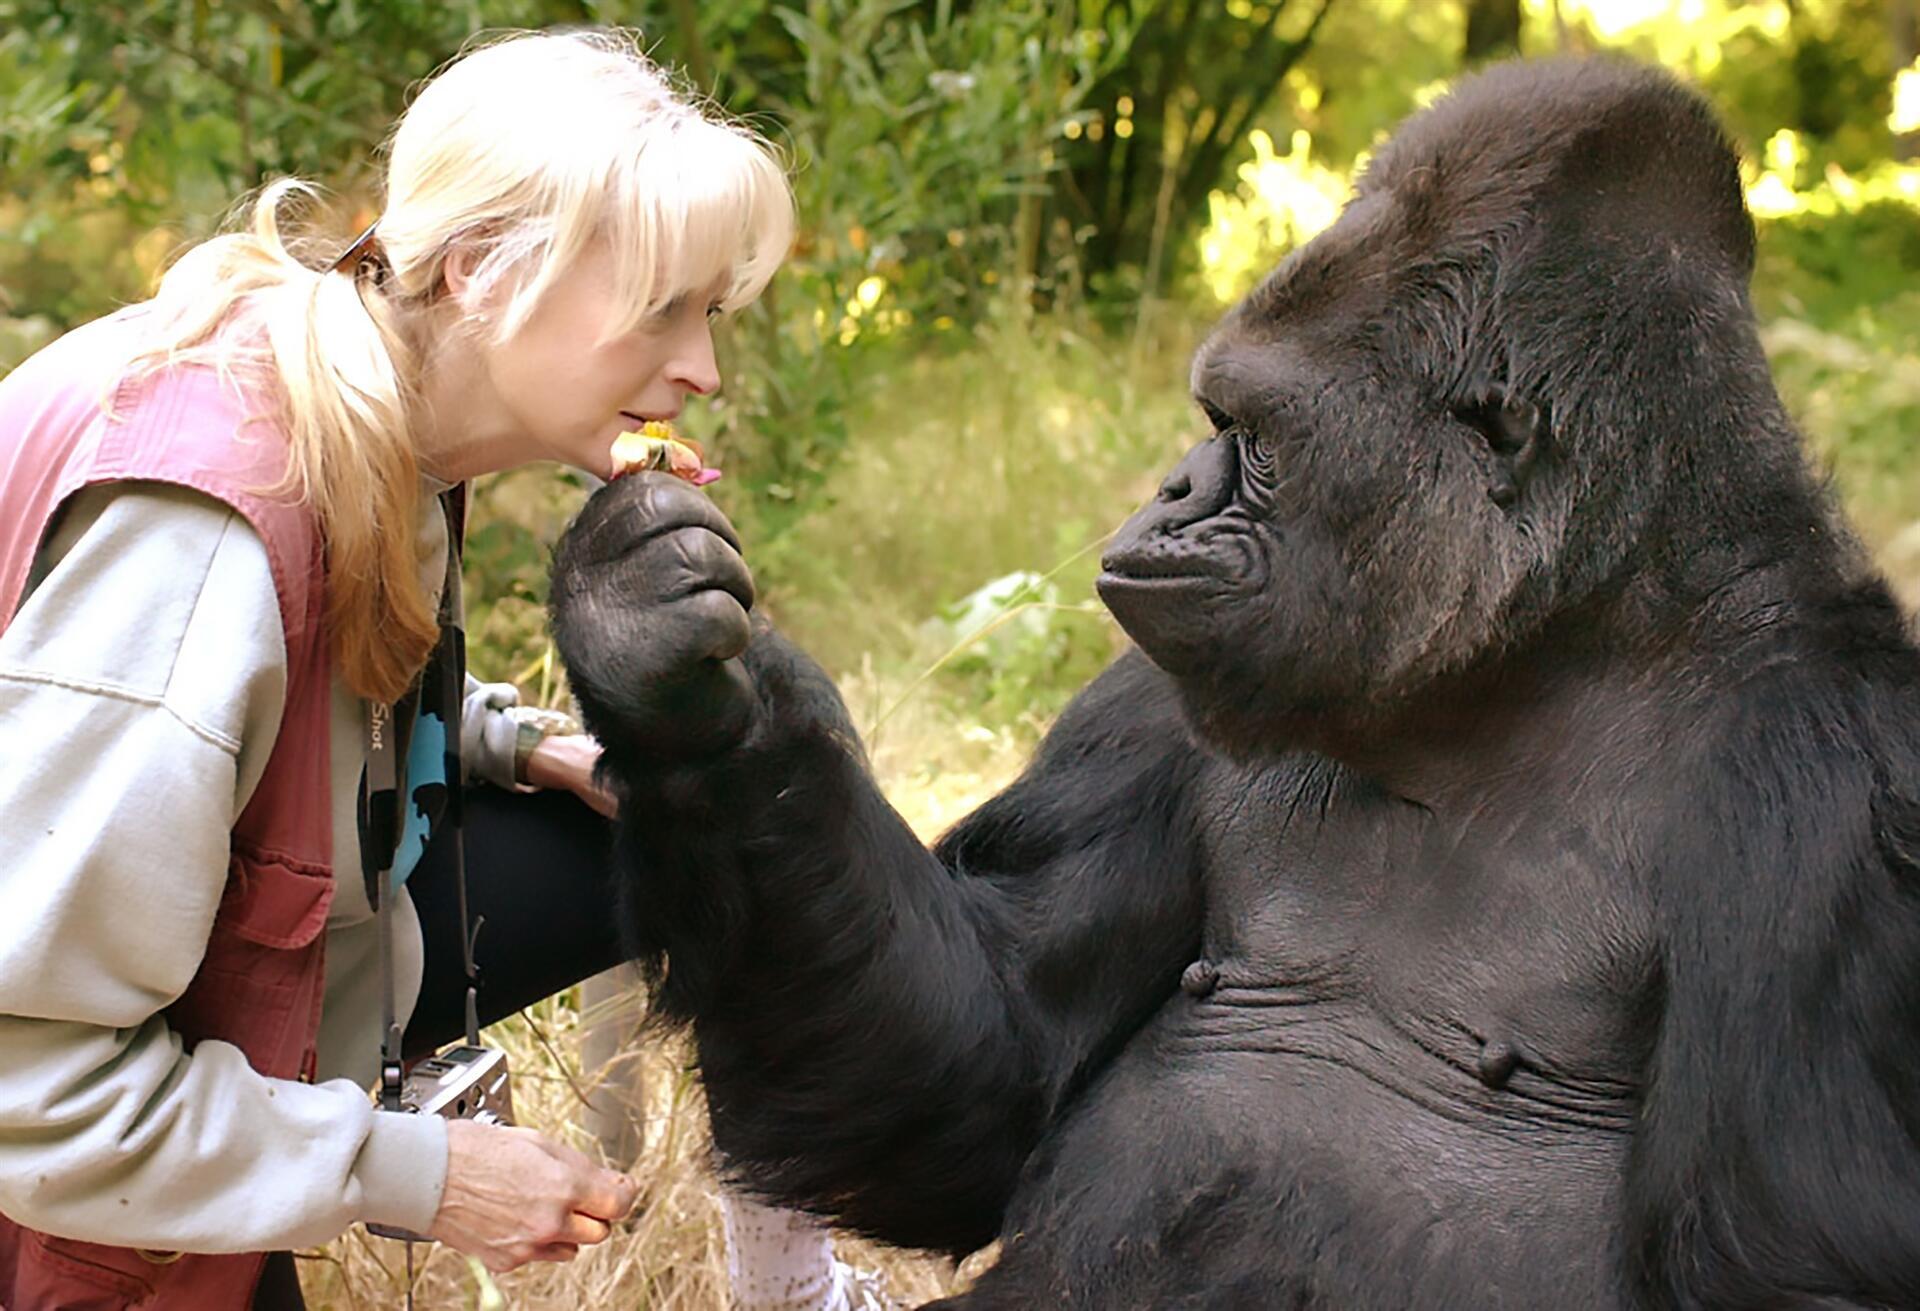 Koko the gorilla used smarts, empathy to help change views